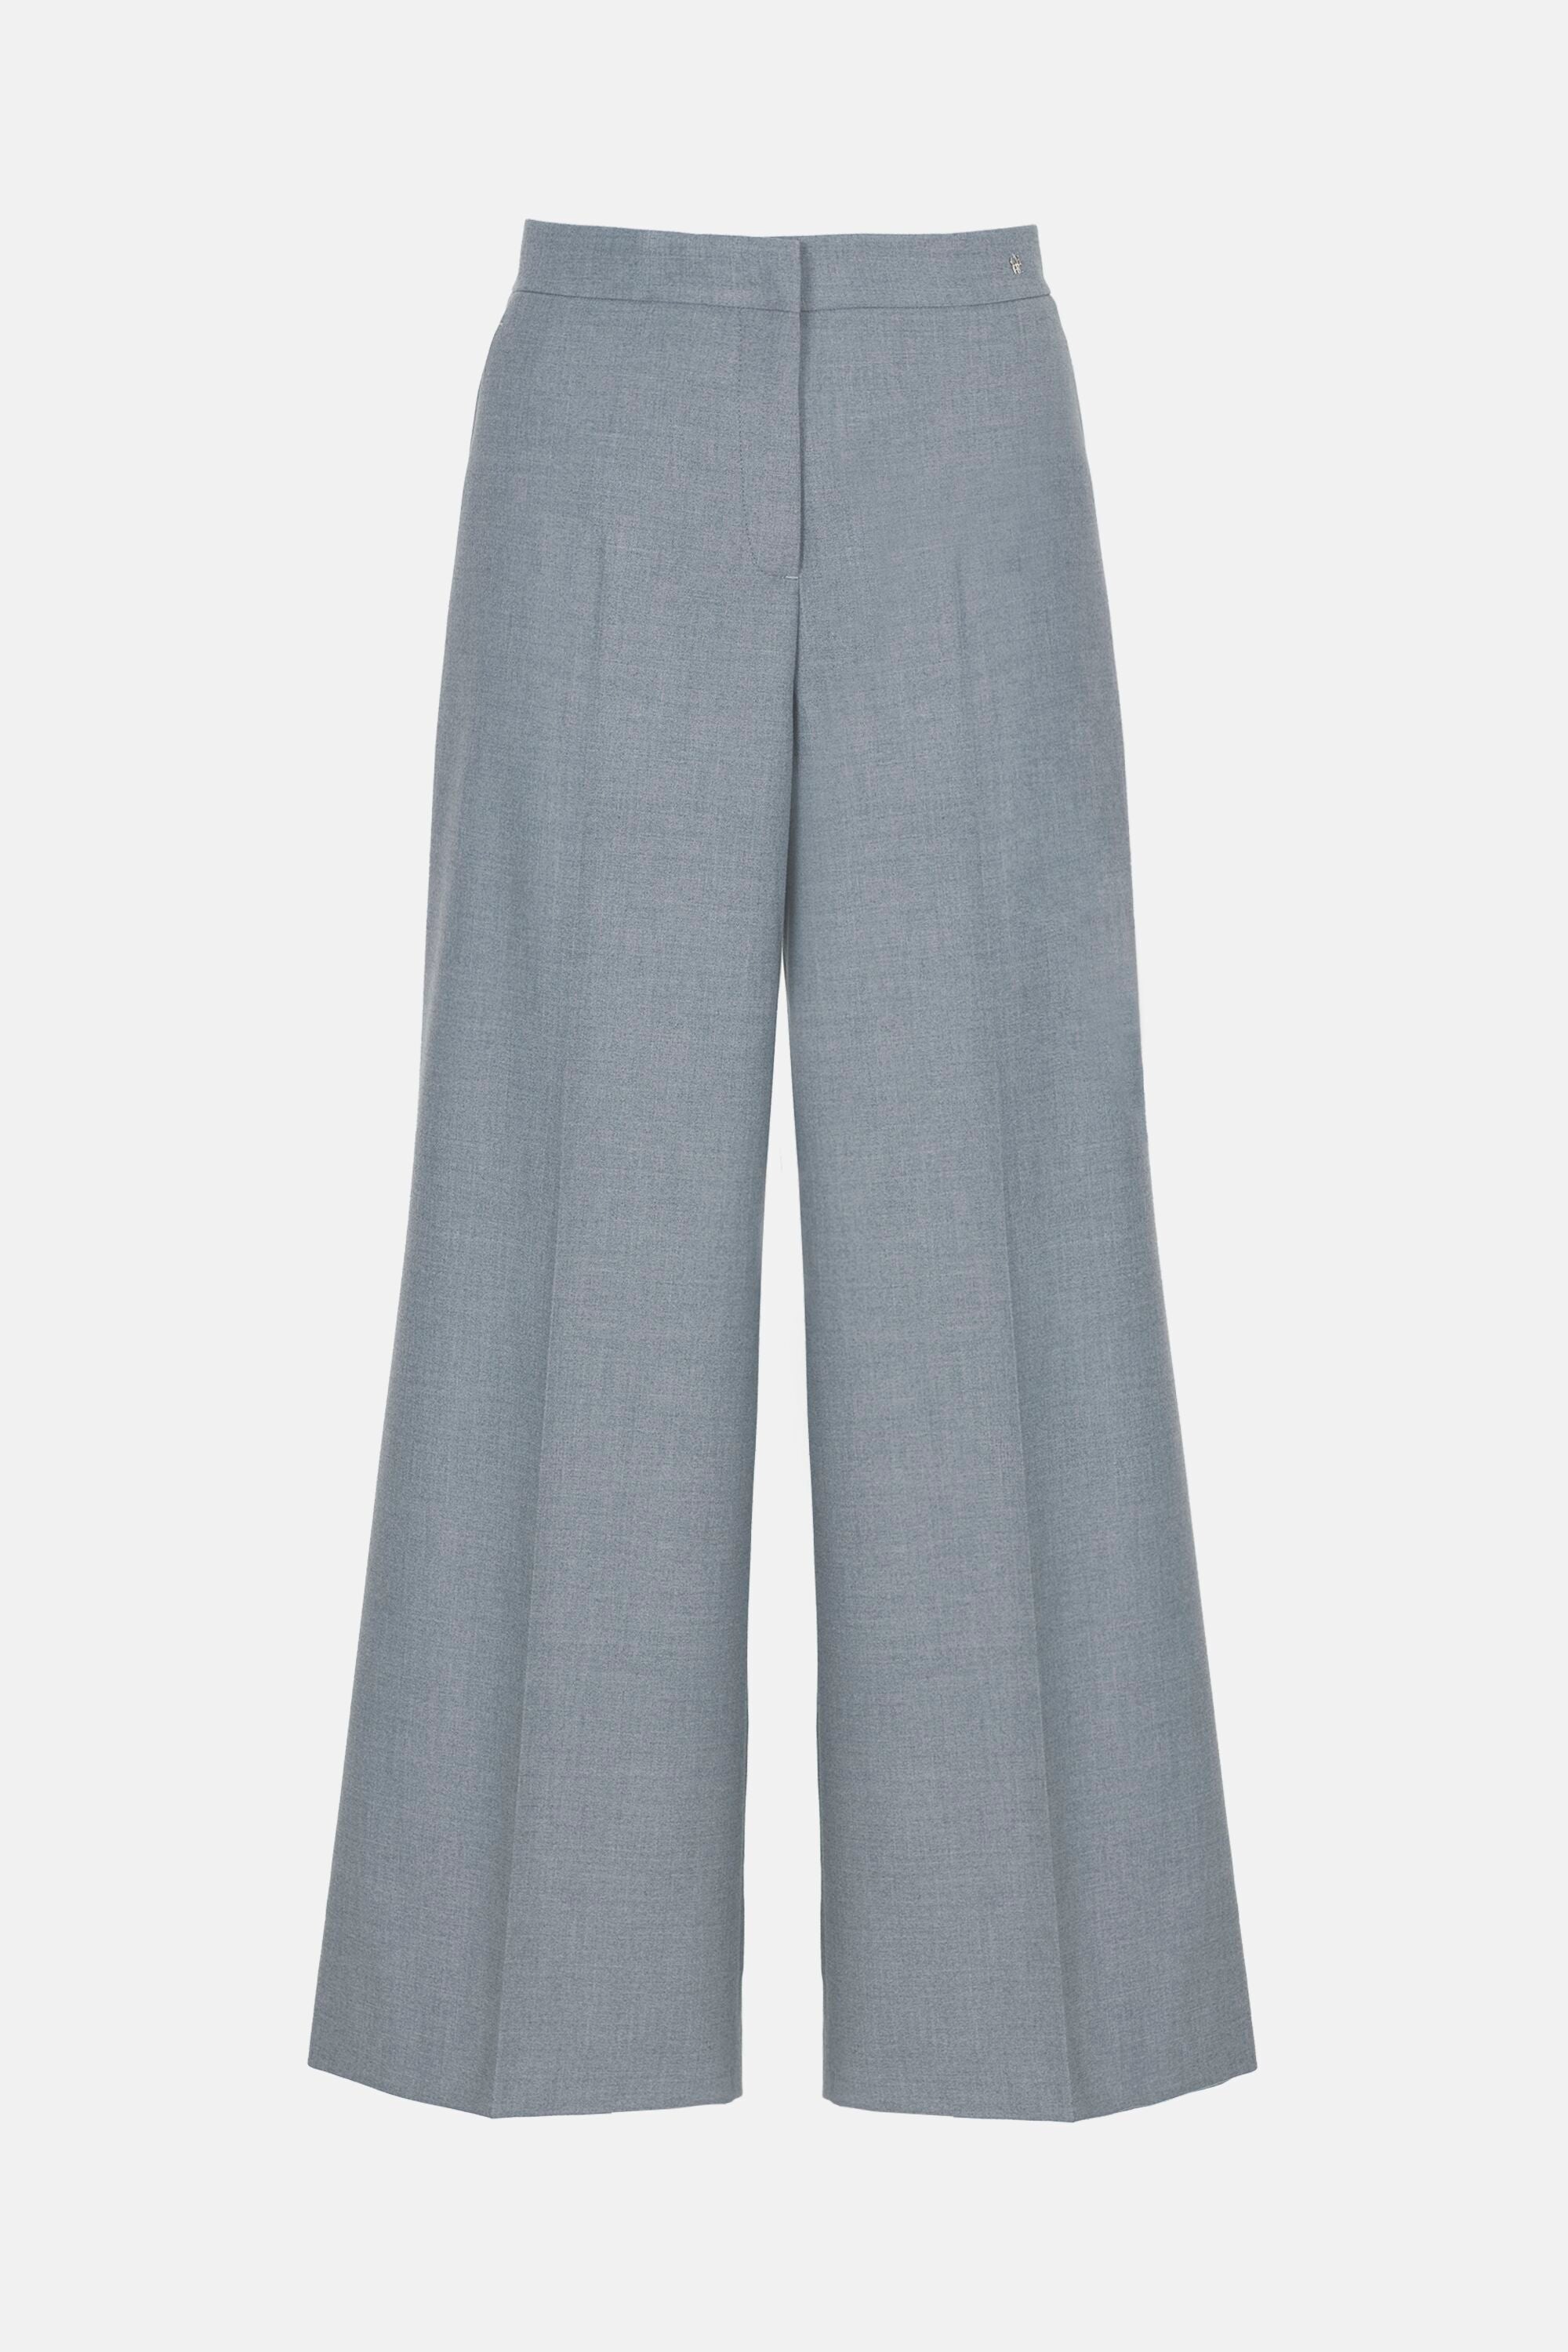 Flannel straight-leg pants gray - CH Carolina Herrera France